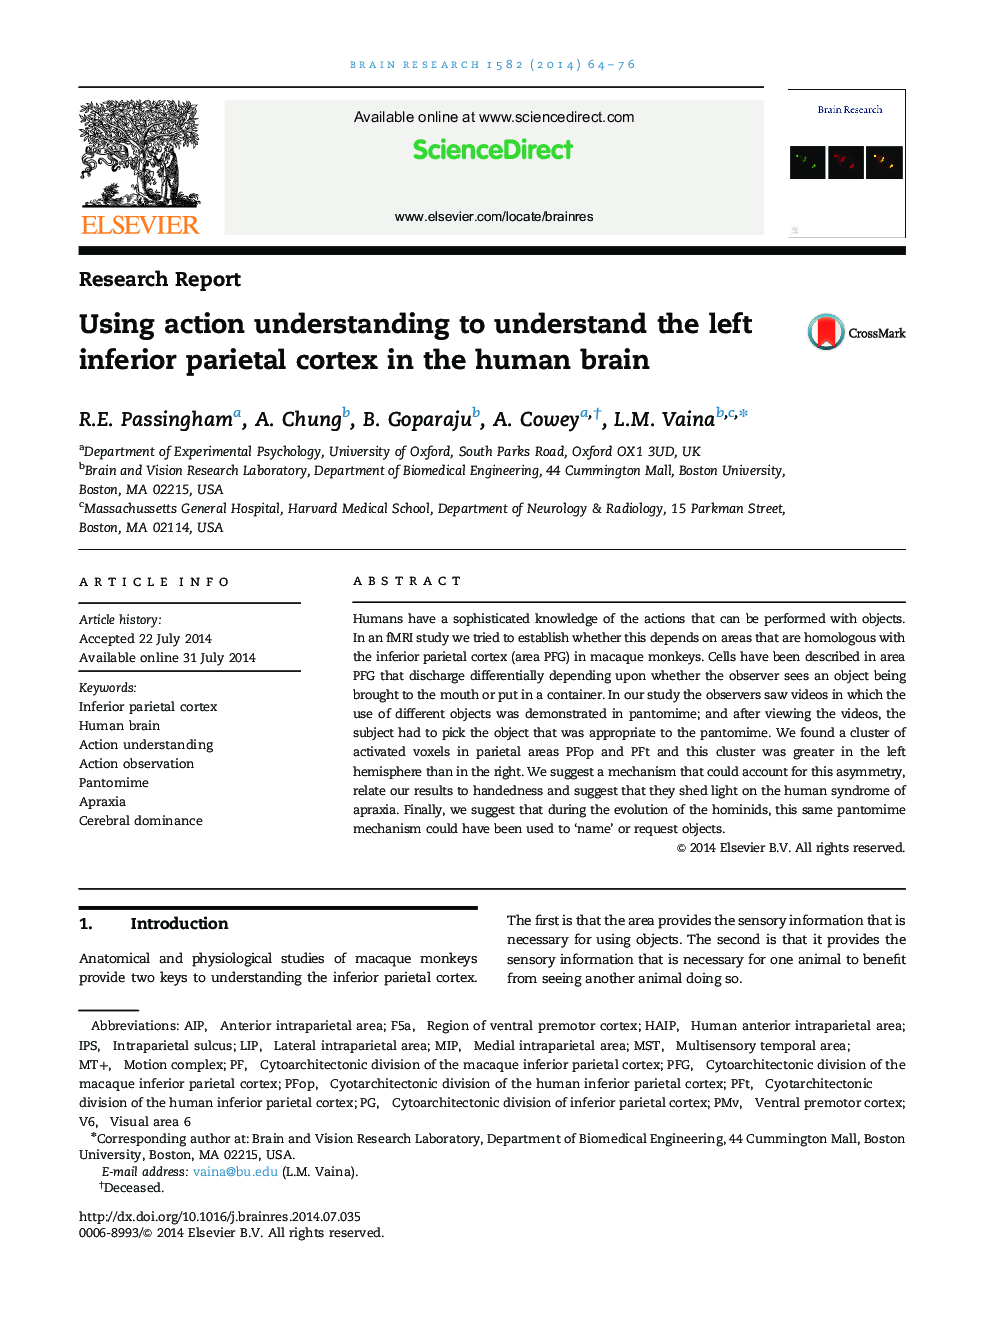 Using action understanding to understand the left inferior parietal cortex in the human brain